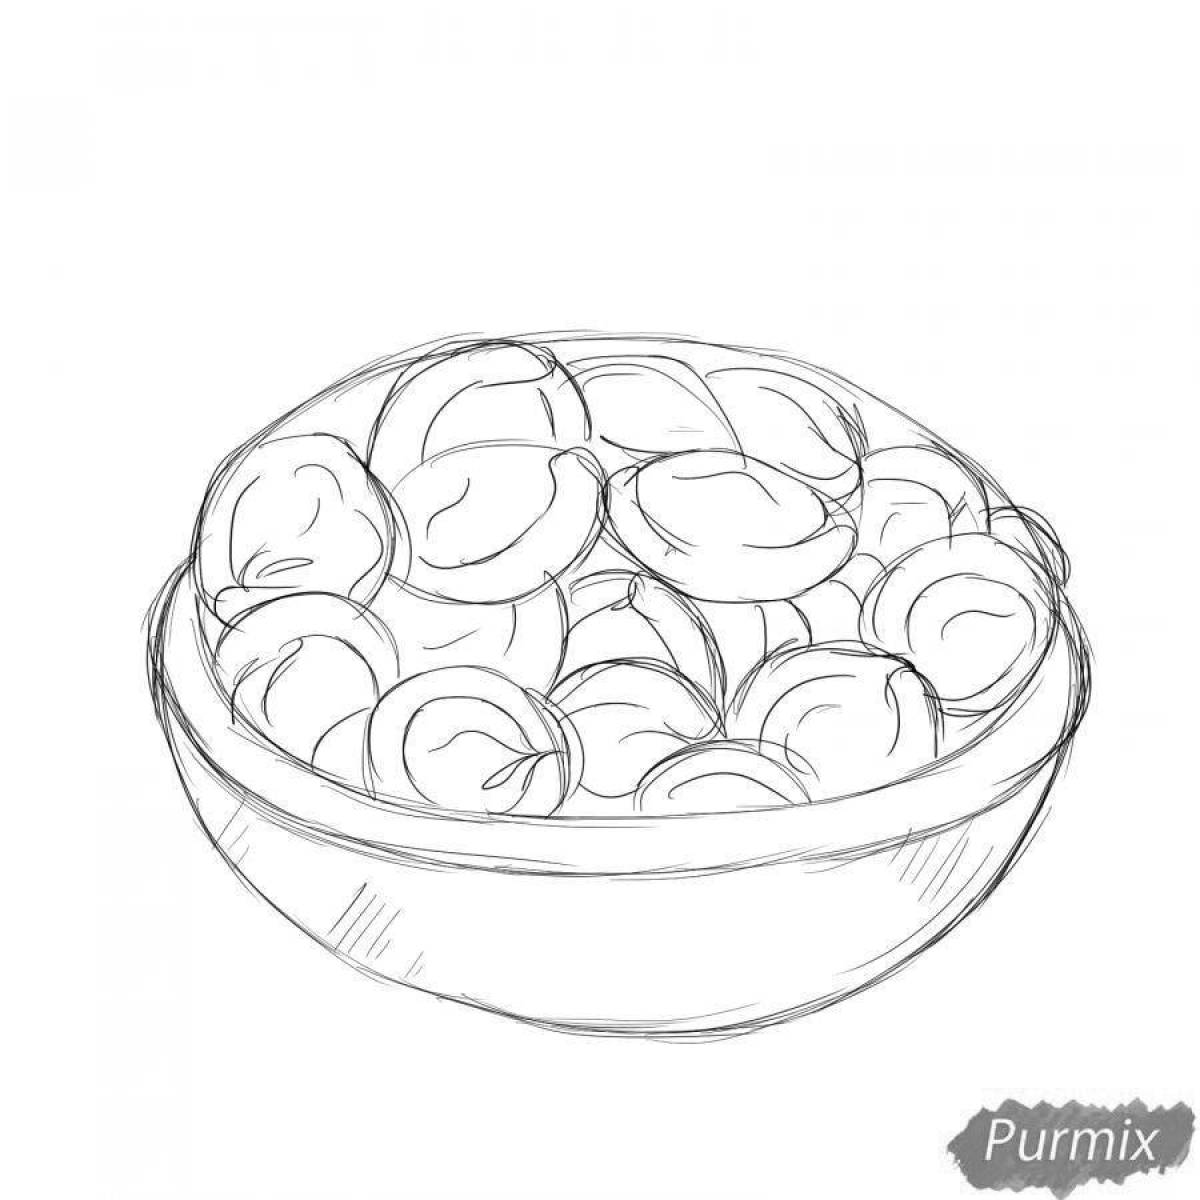 Irresistible dumplings in a bowl